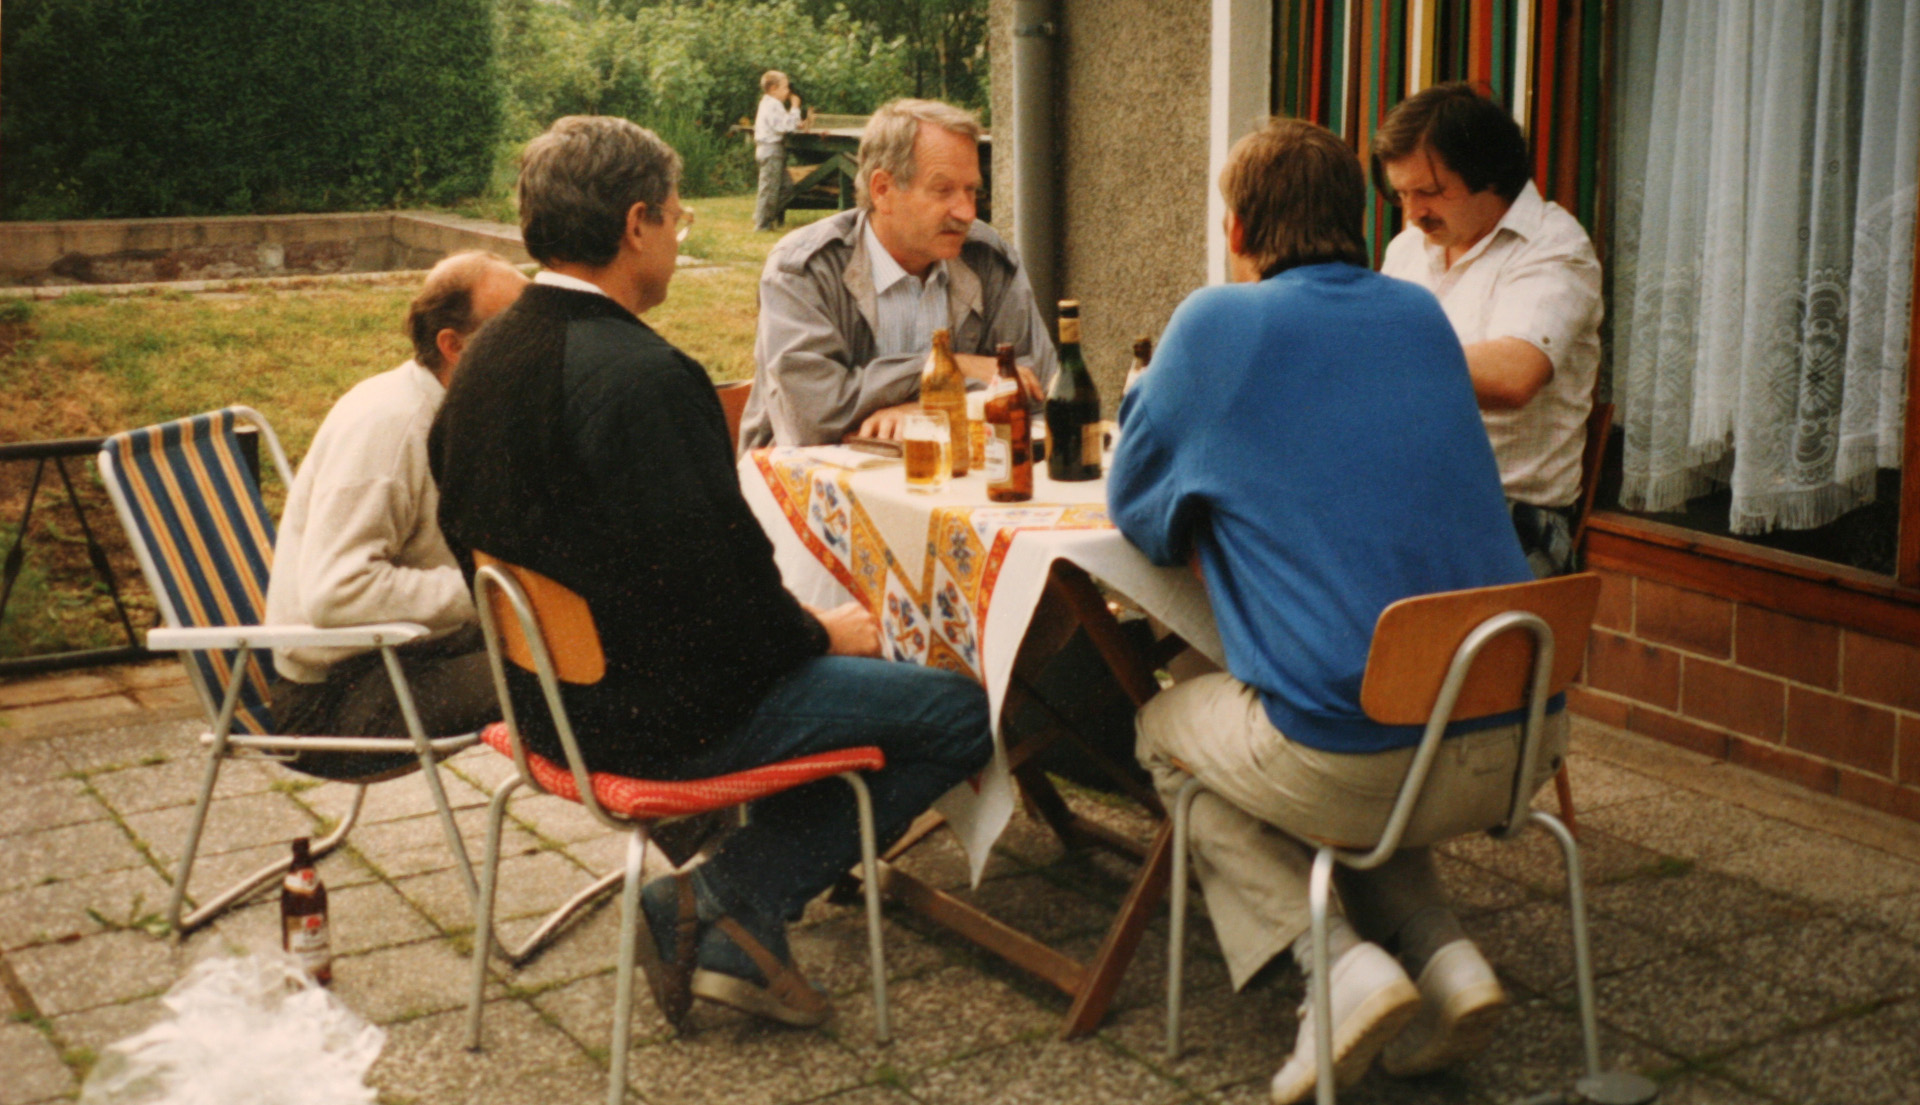 Gründung der S&P Sahlmann GbR im Mai 1991, Gründungsmitglieder sitzen im Garten am Tisch